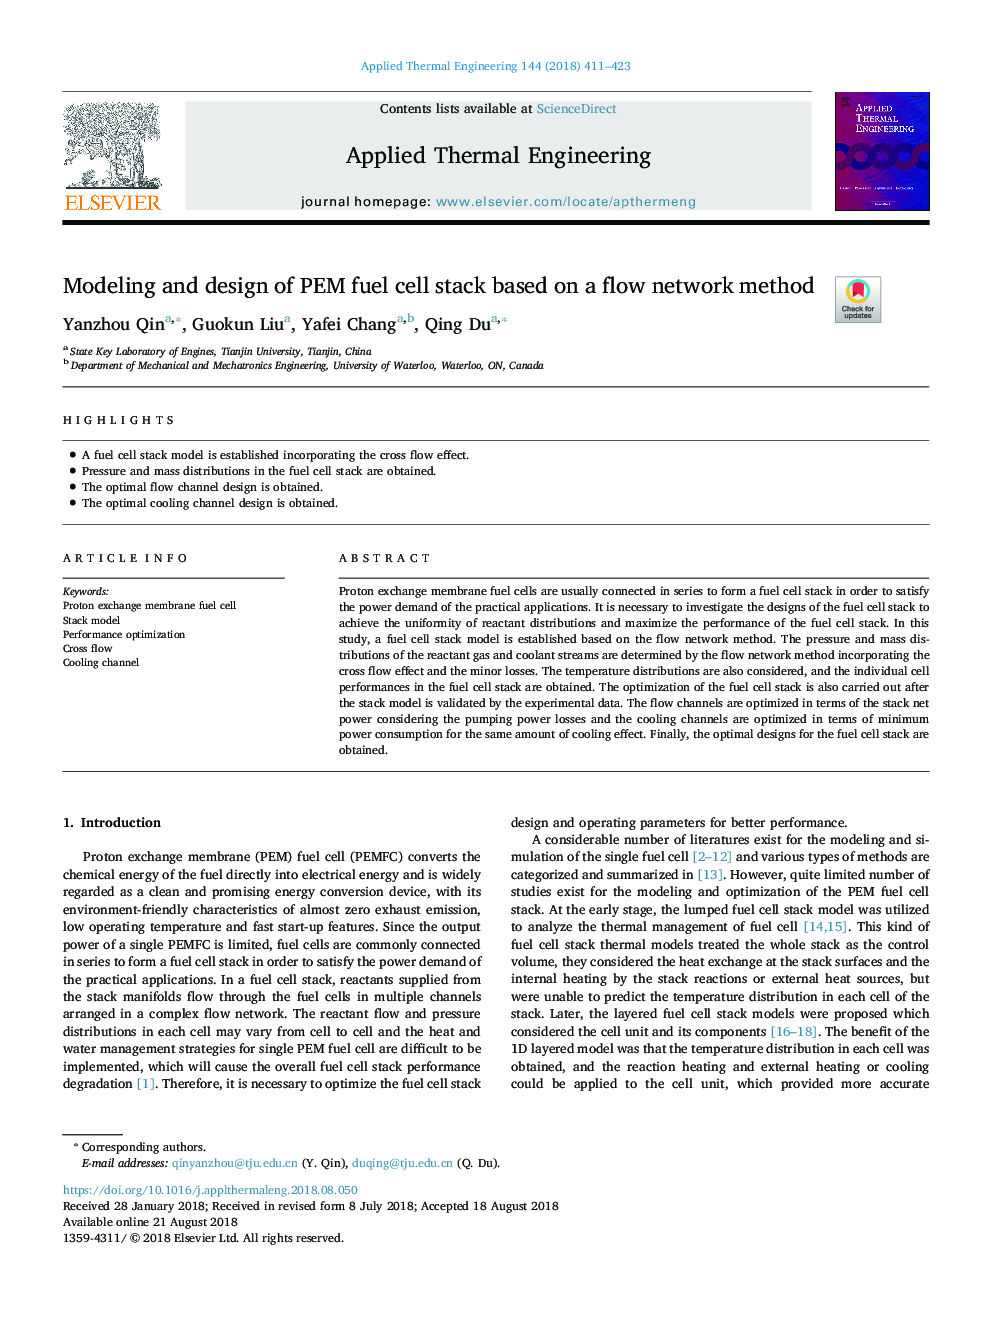 Modeling and design of PEM fuel cell stack based on a flow network method